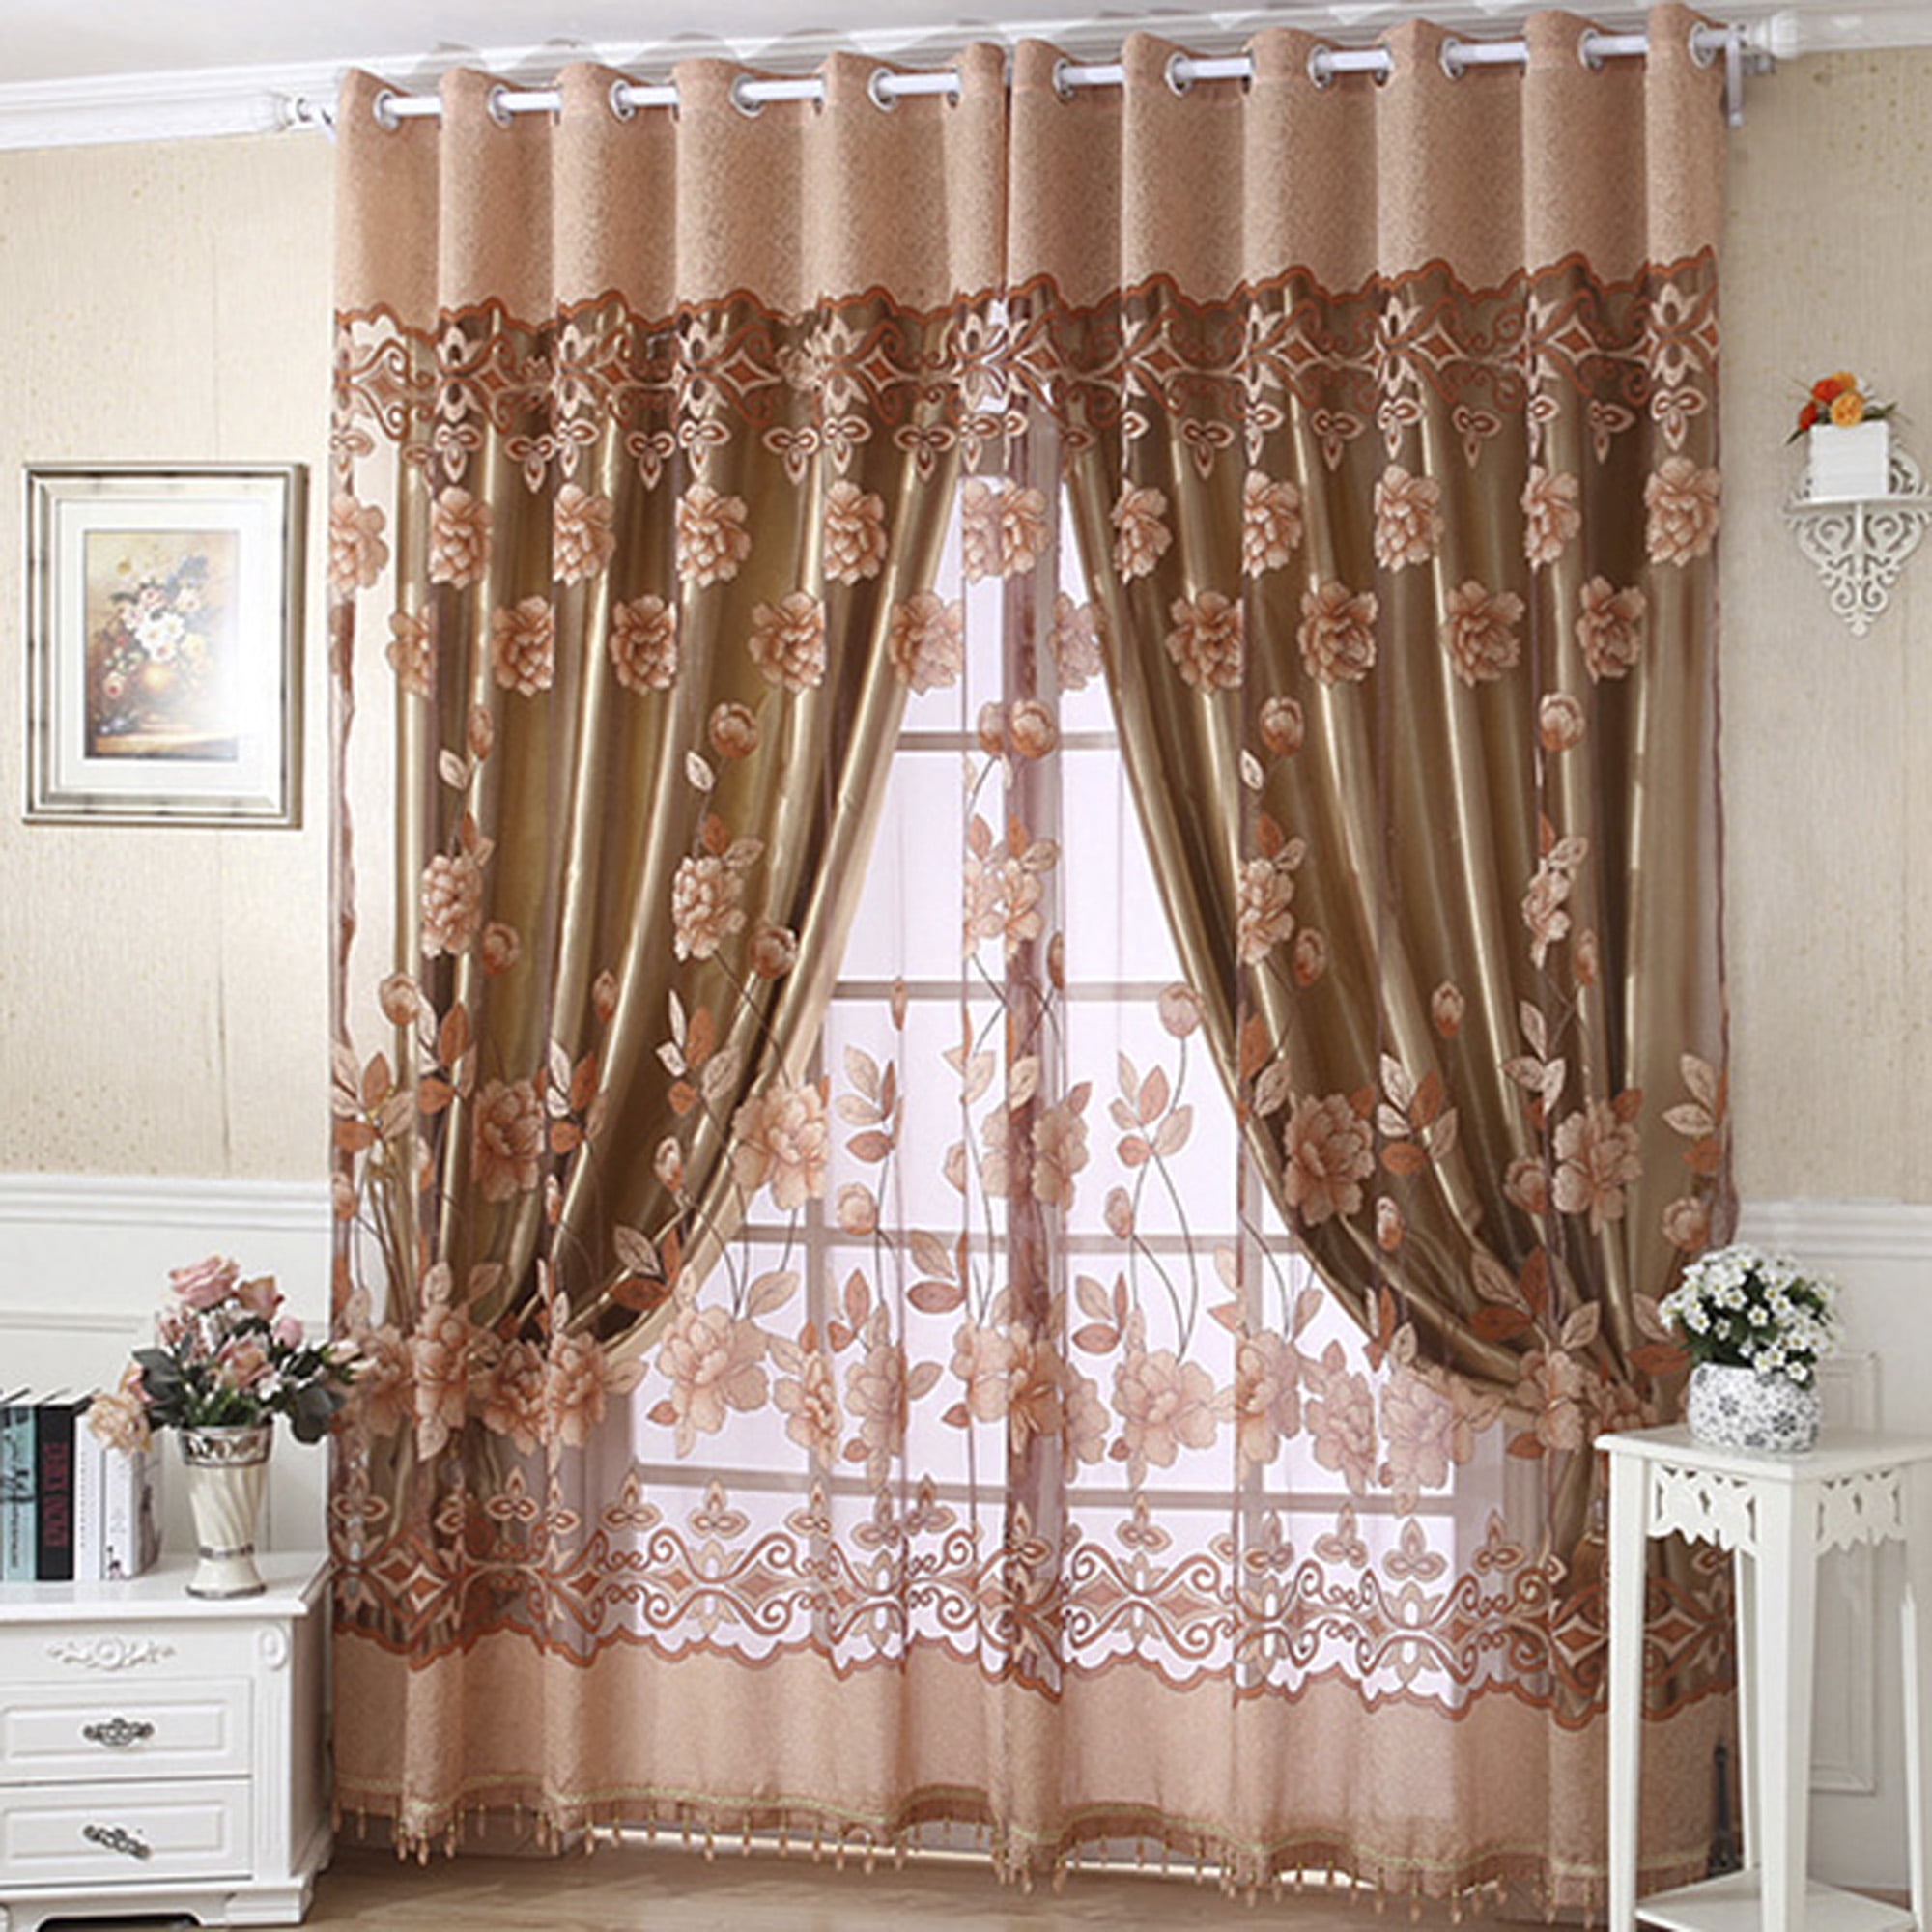 1pcs Small Fresh Flower Curtains for Bedroom Living Room Window Decor Household 